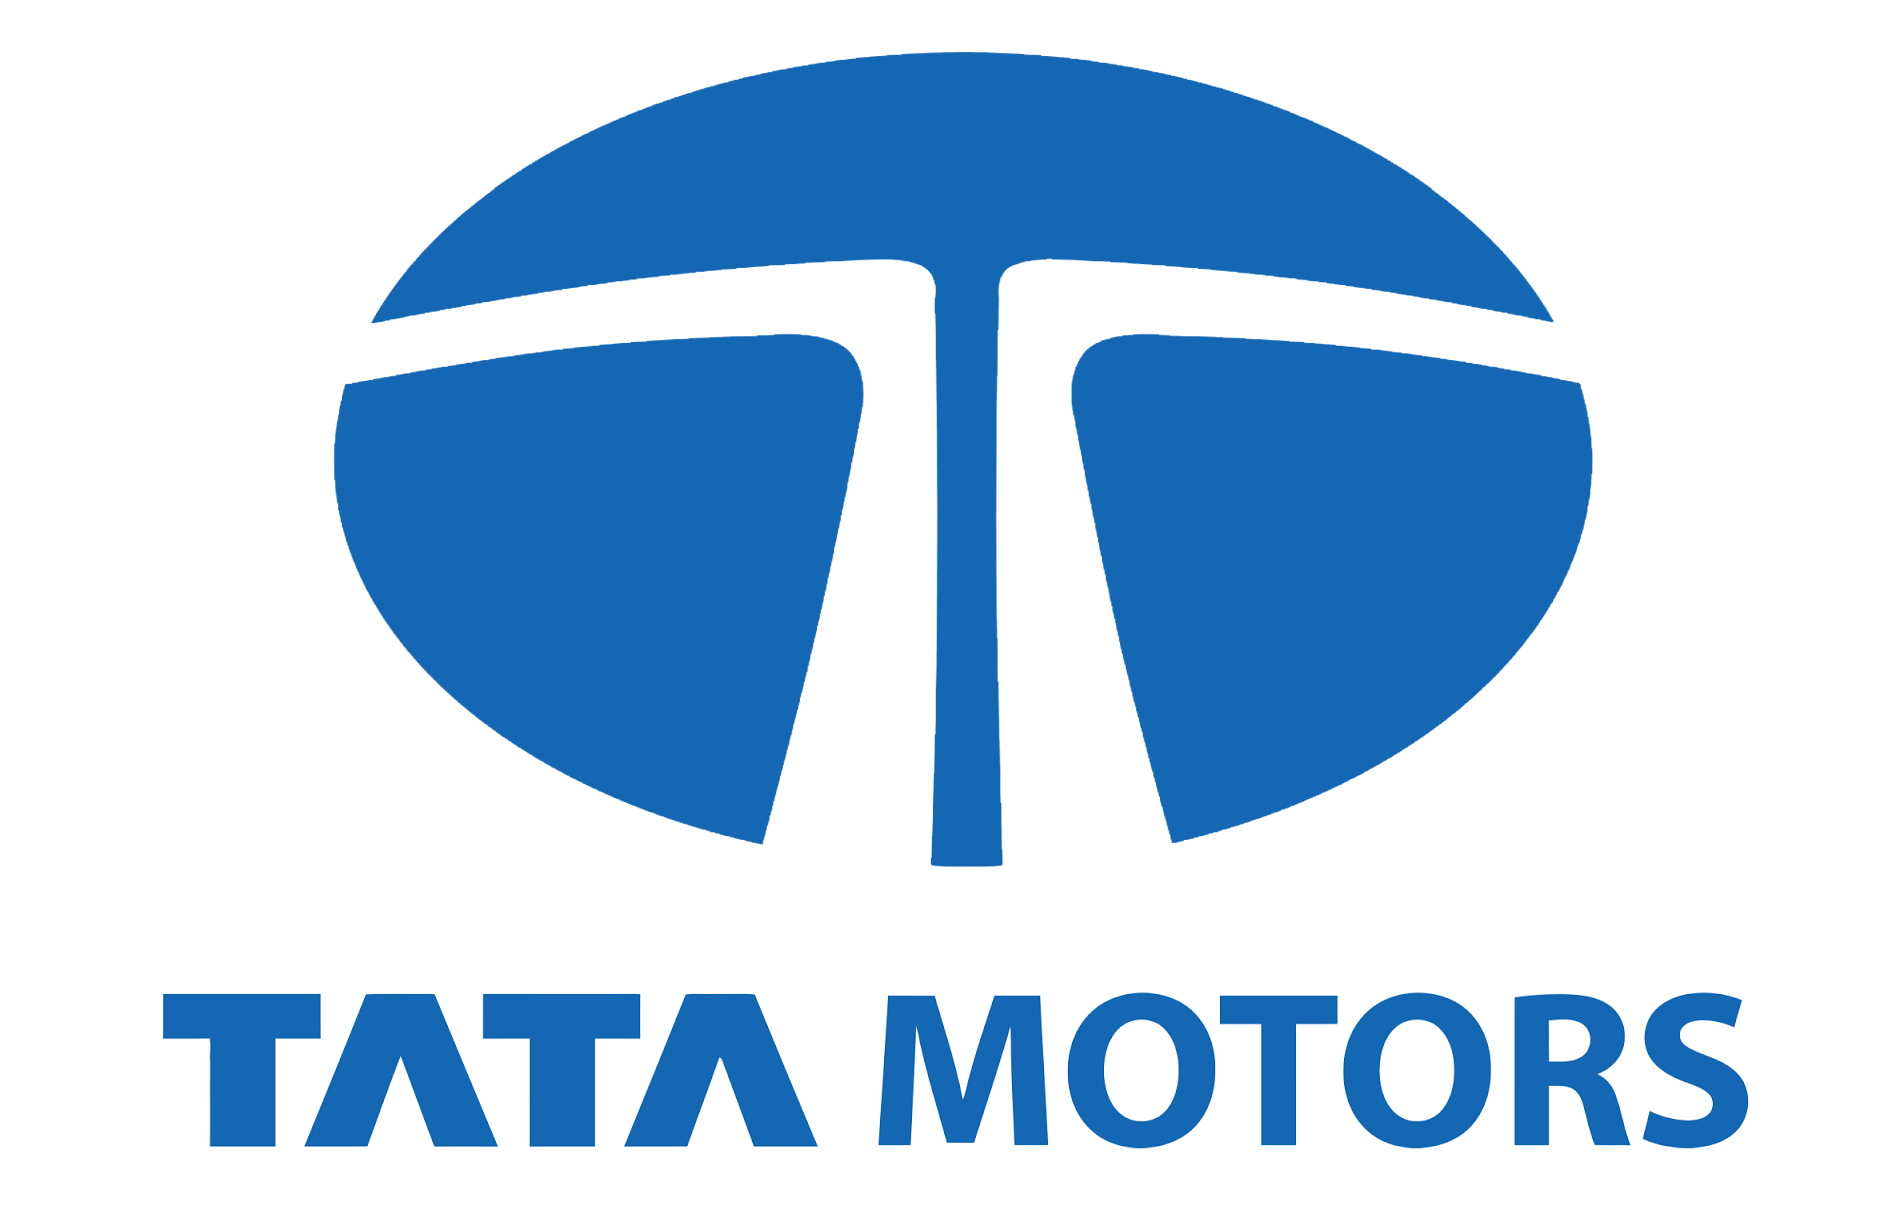 Tata Motors Cars Showroom - Jaika Motors Logo